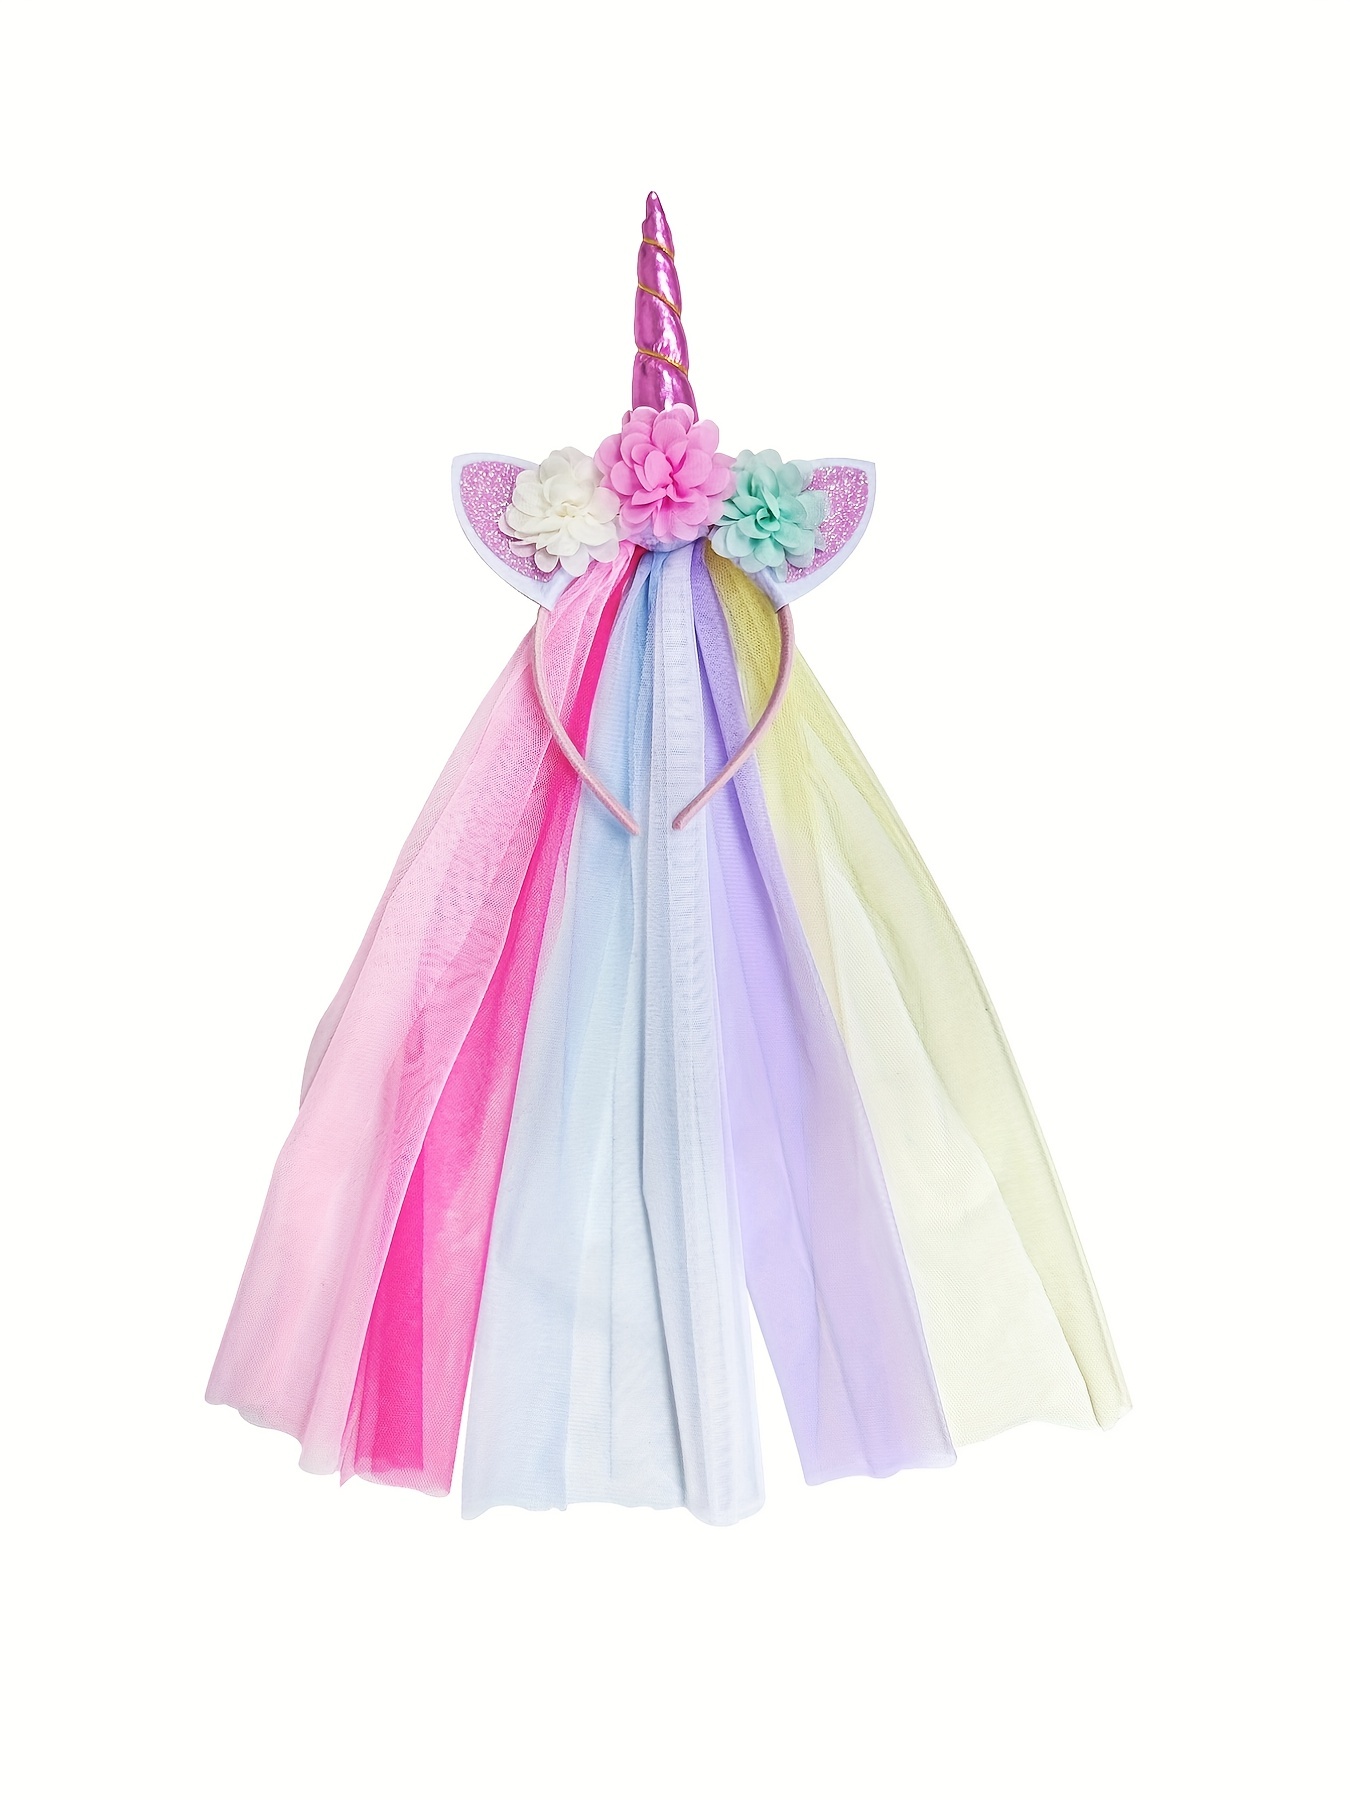 Traje de unicornio rosa disfraz de Halloween para niñas disfraz de